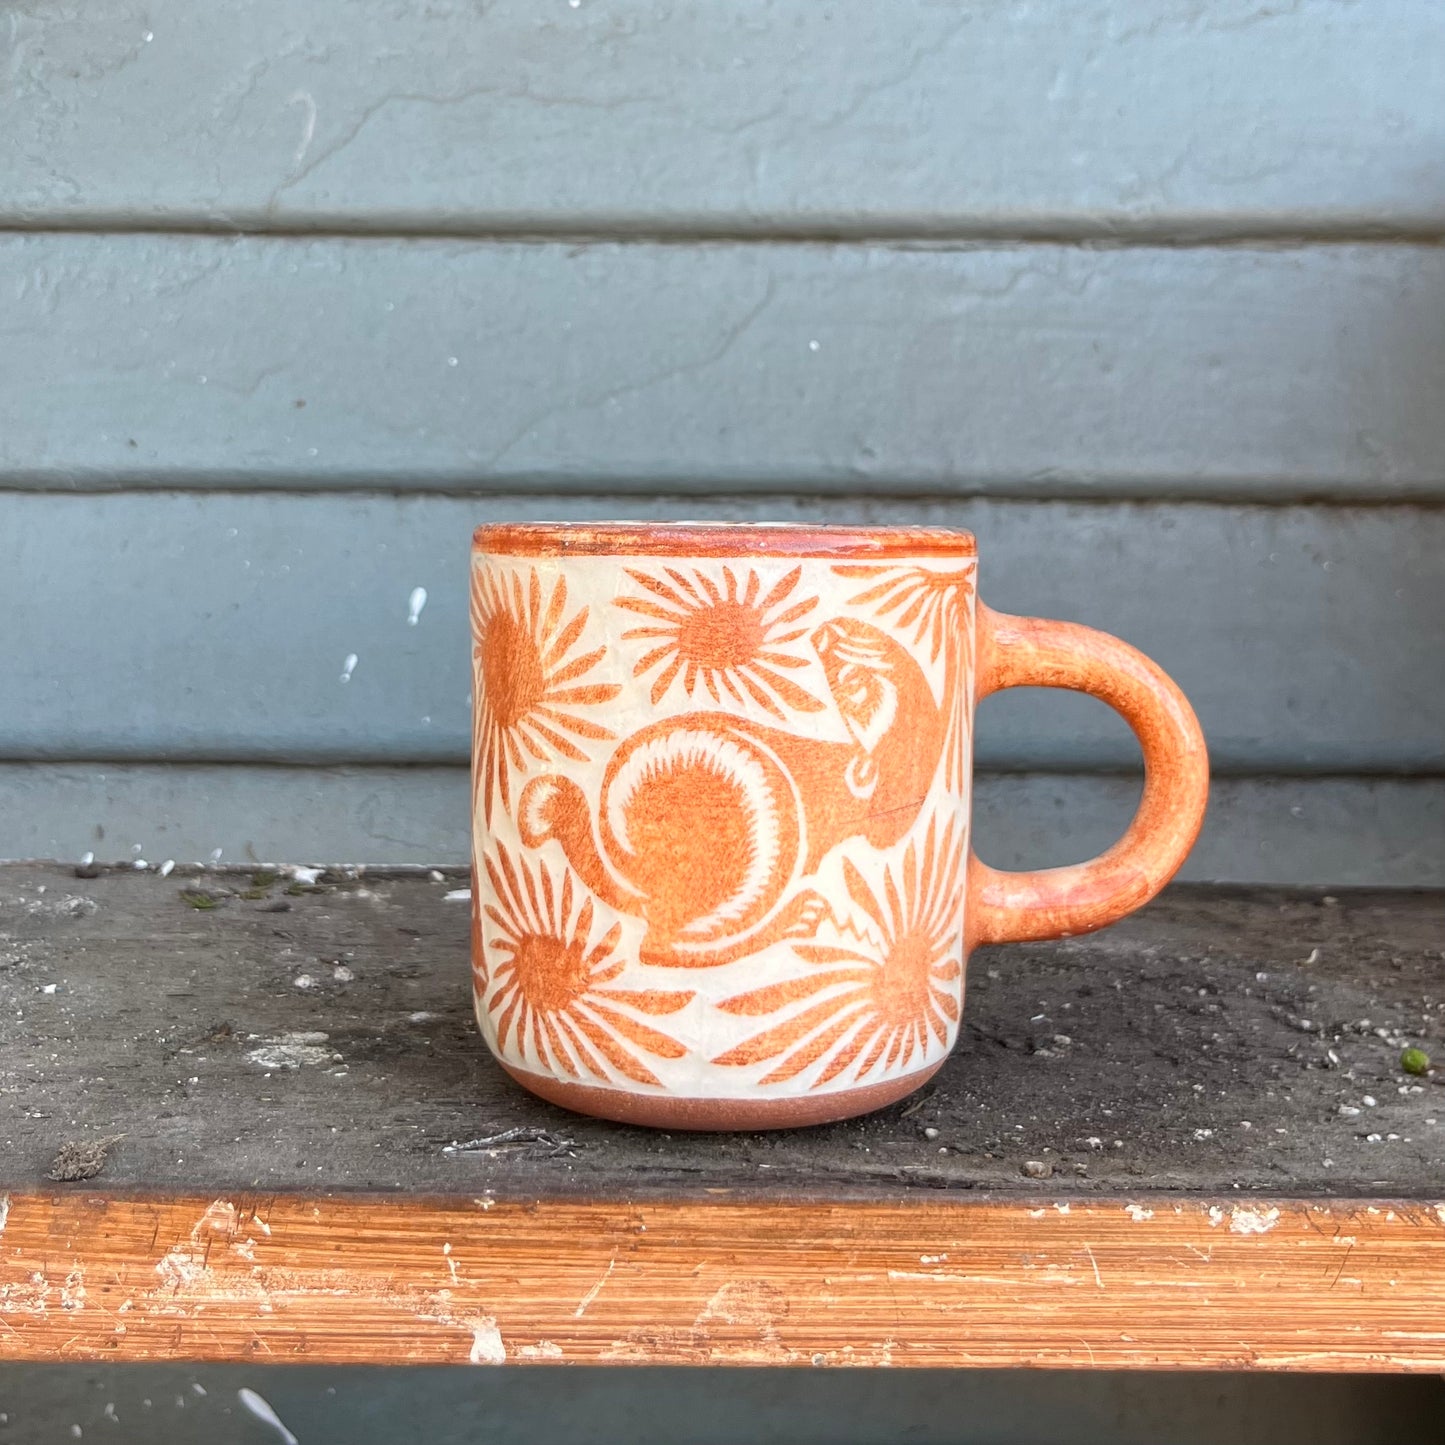 Mixteca Ceramic Mug by Derrumbe (Preorder)